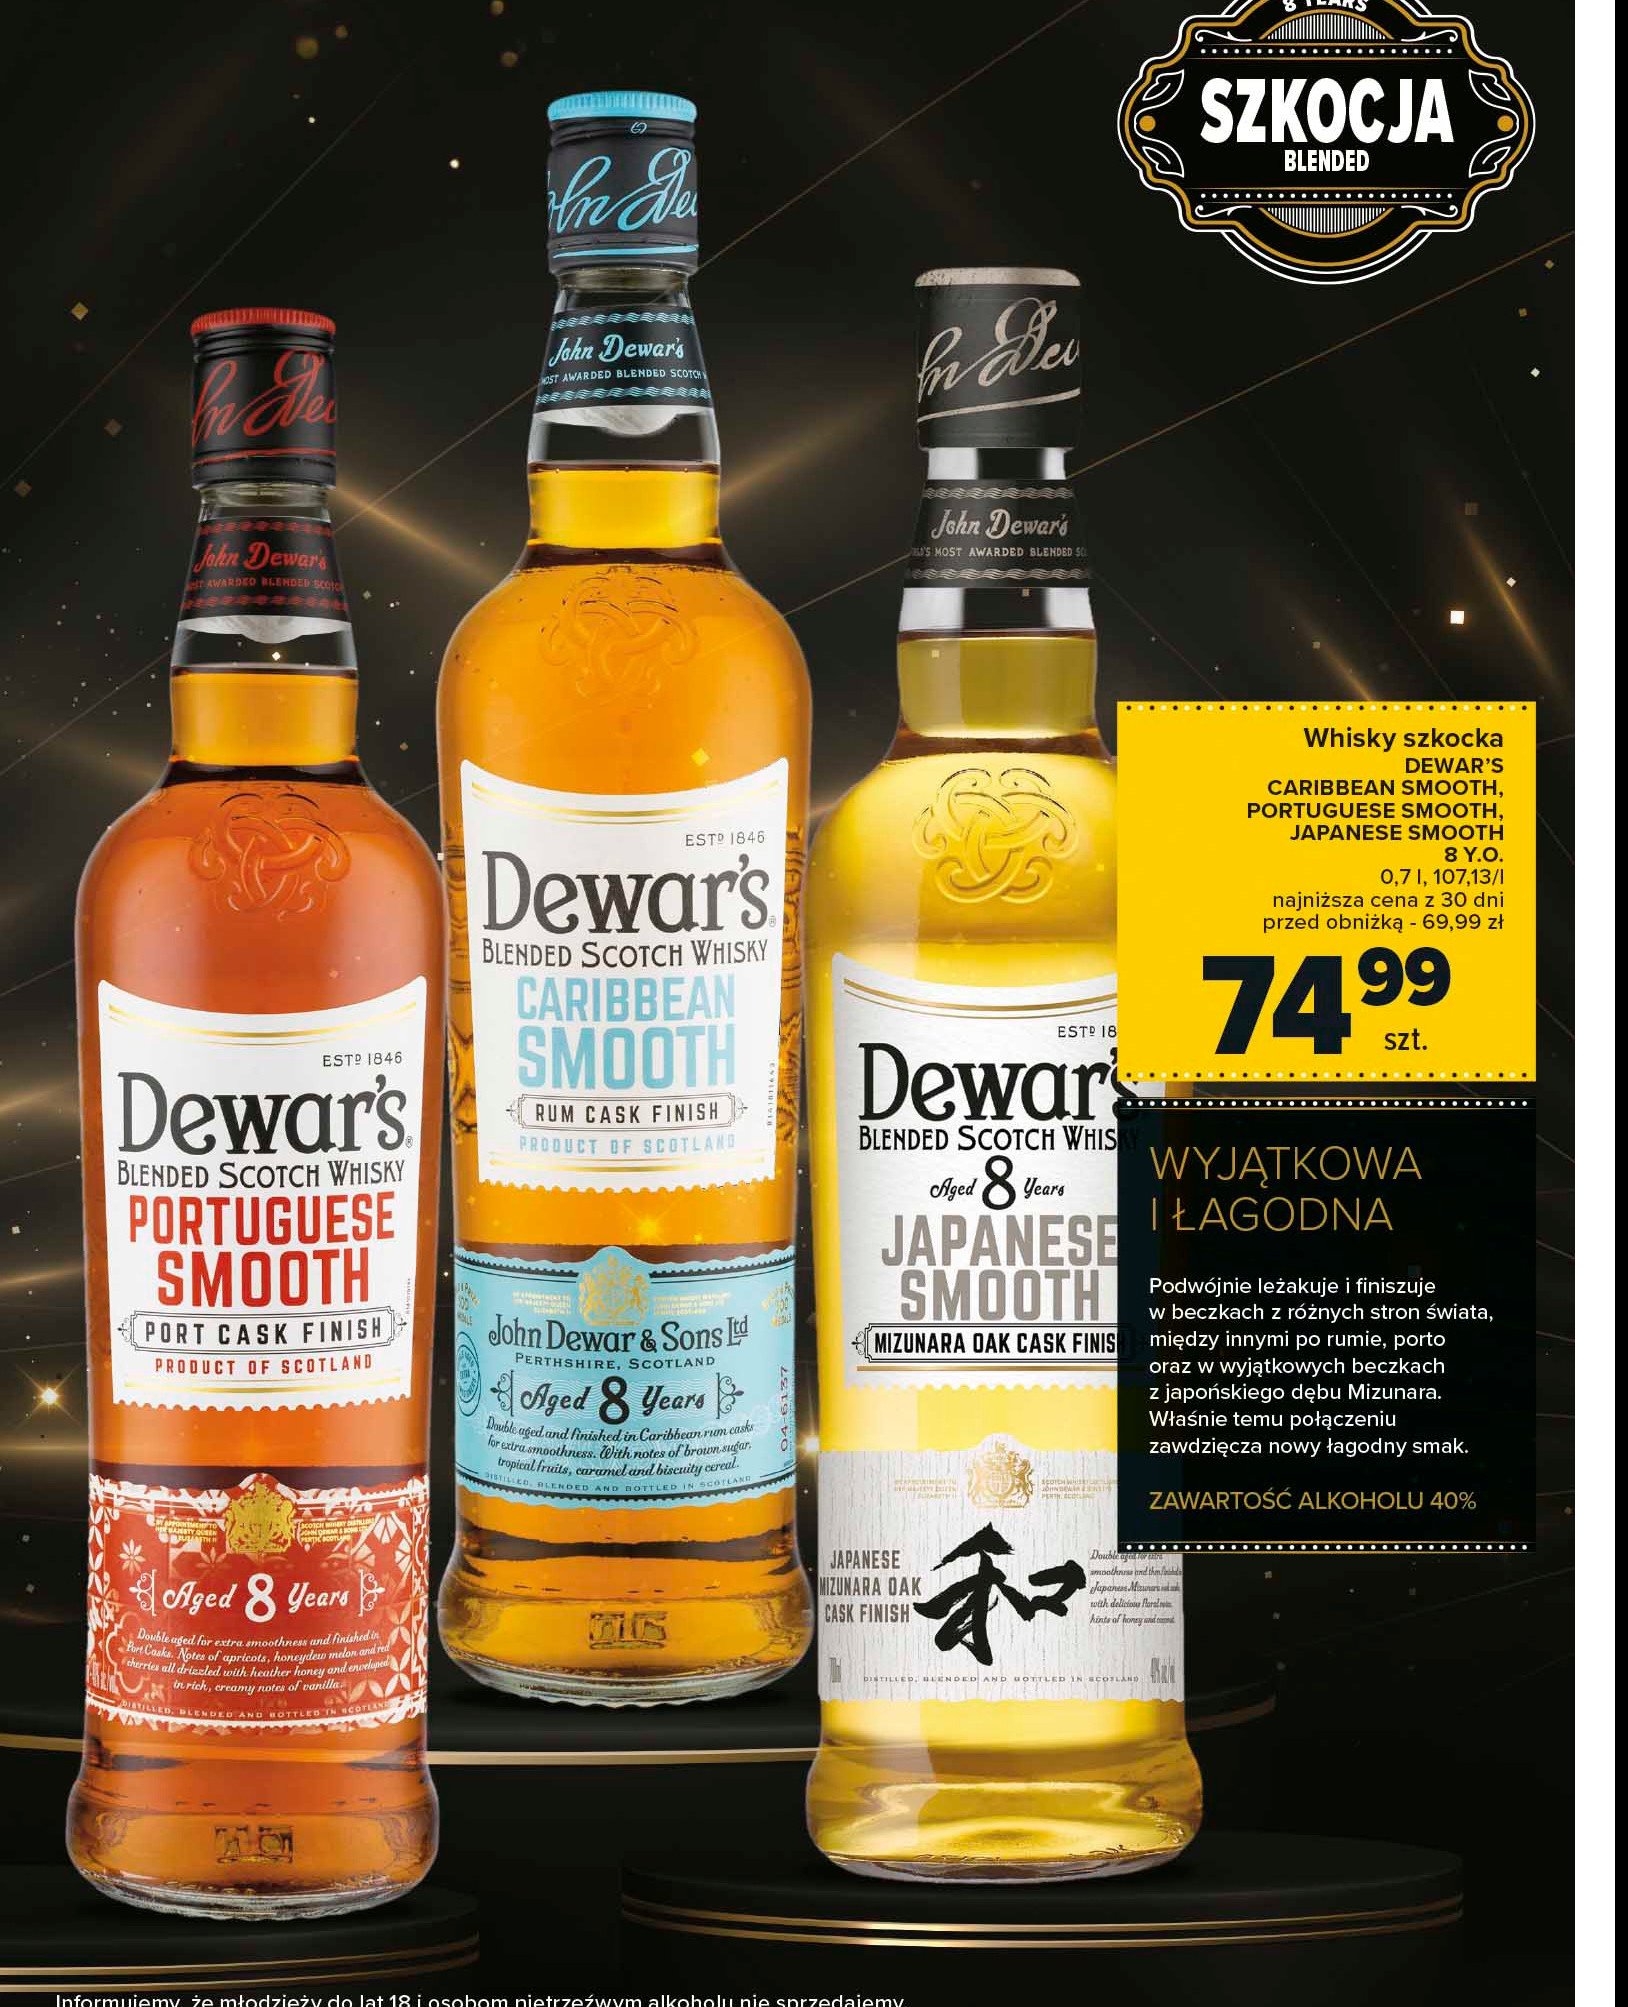 Whisky Dewar's 8 japanese smooth promocja